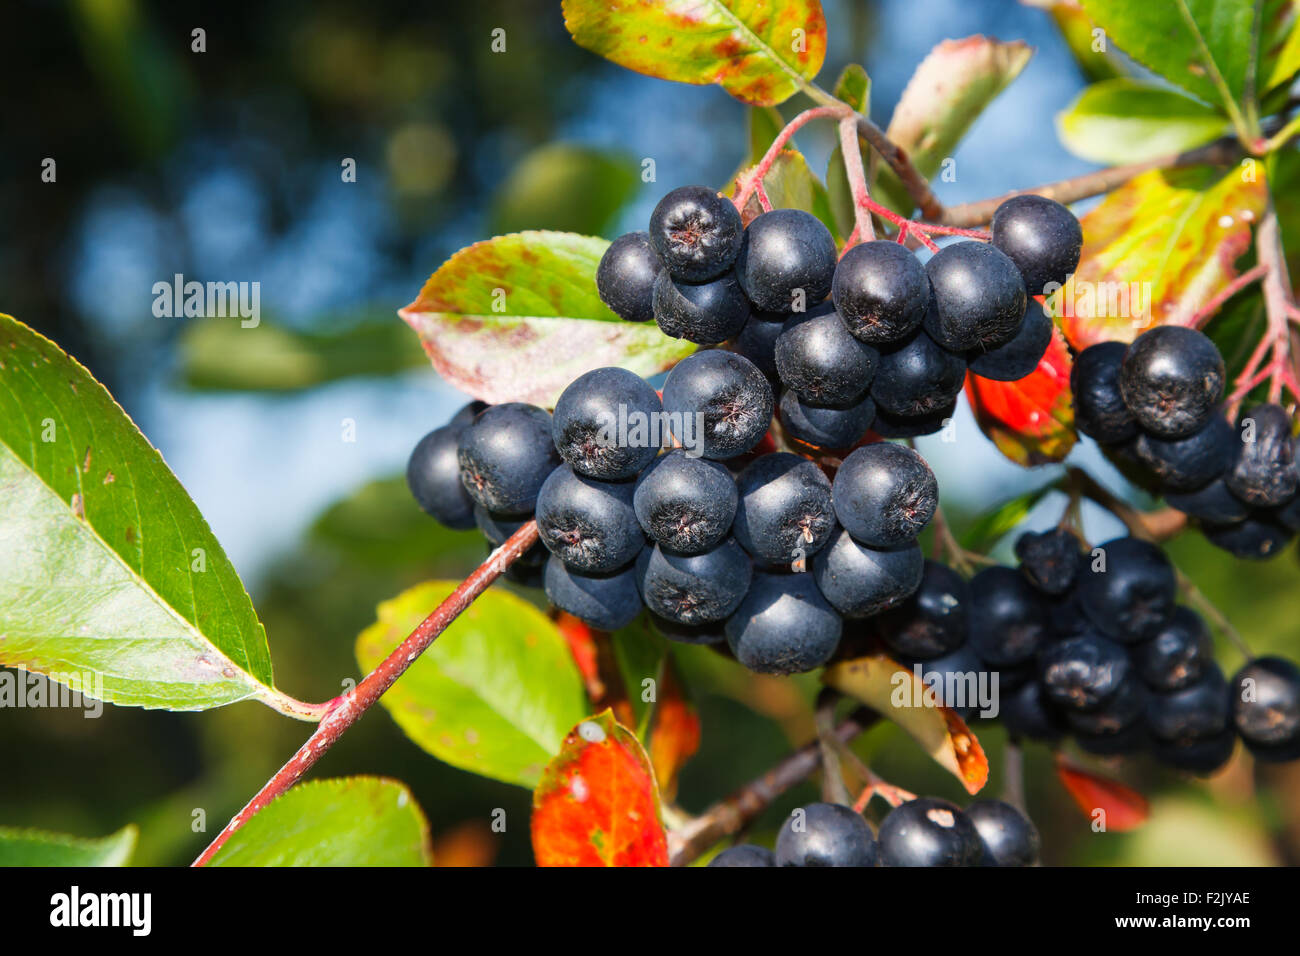 Aronia melanocarpa - ripe aronia berries on the tree Stock Photo